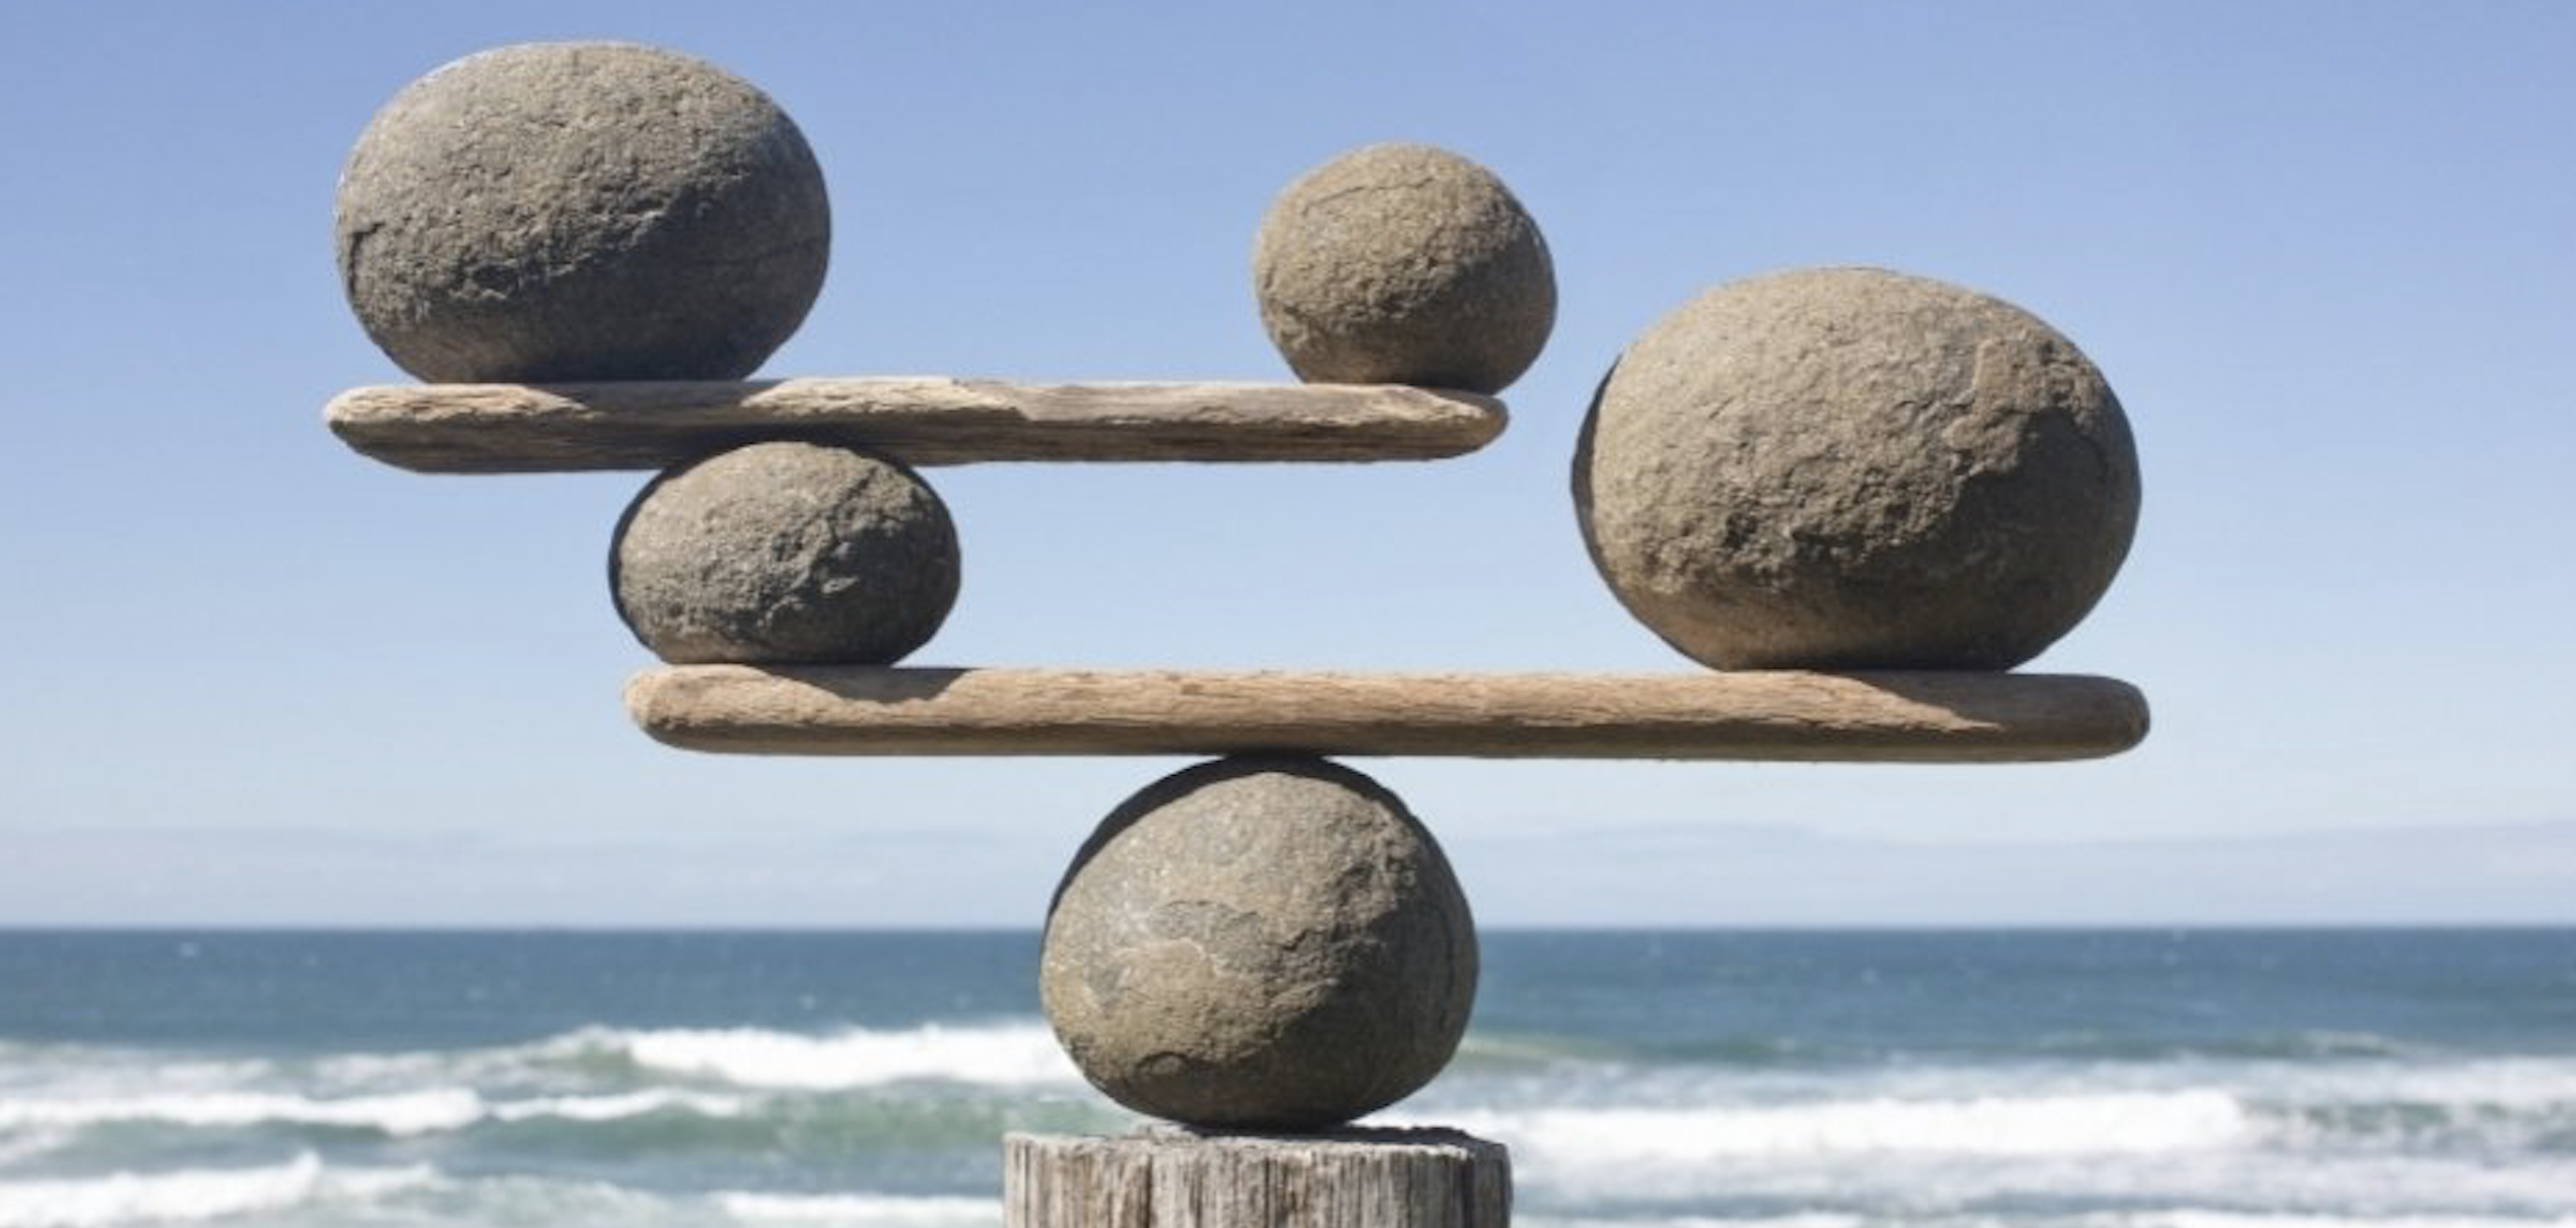 Равновесие в душе. Камни равновесие. Равновесие в природе. Равновесие жизни. Баланс в природе.